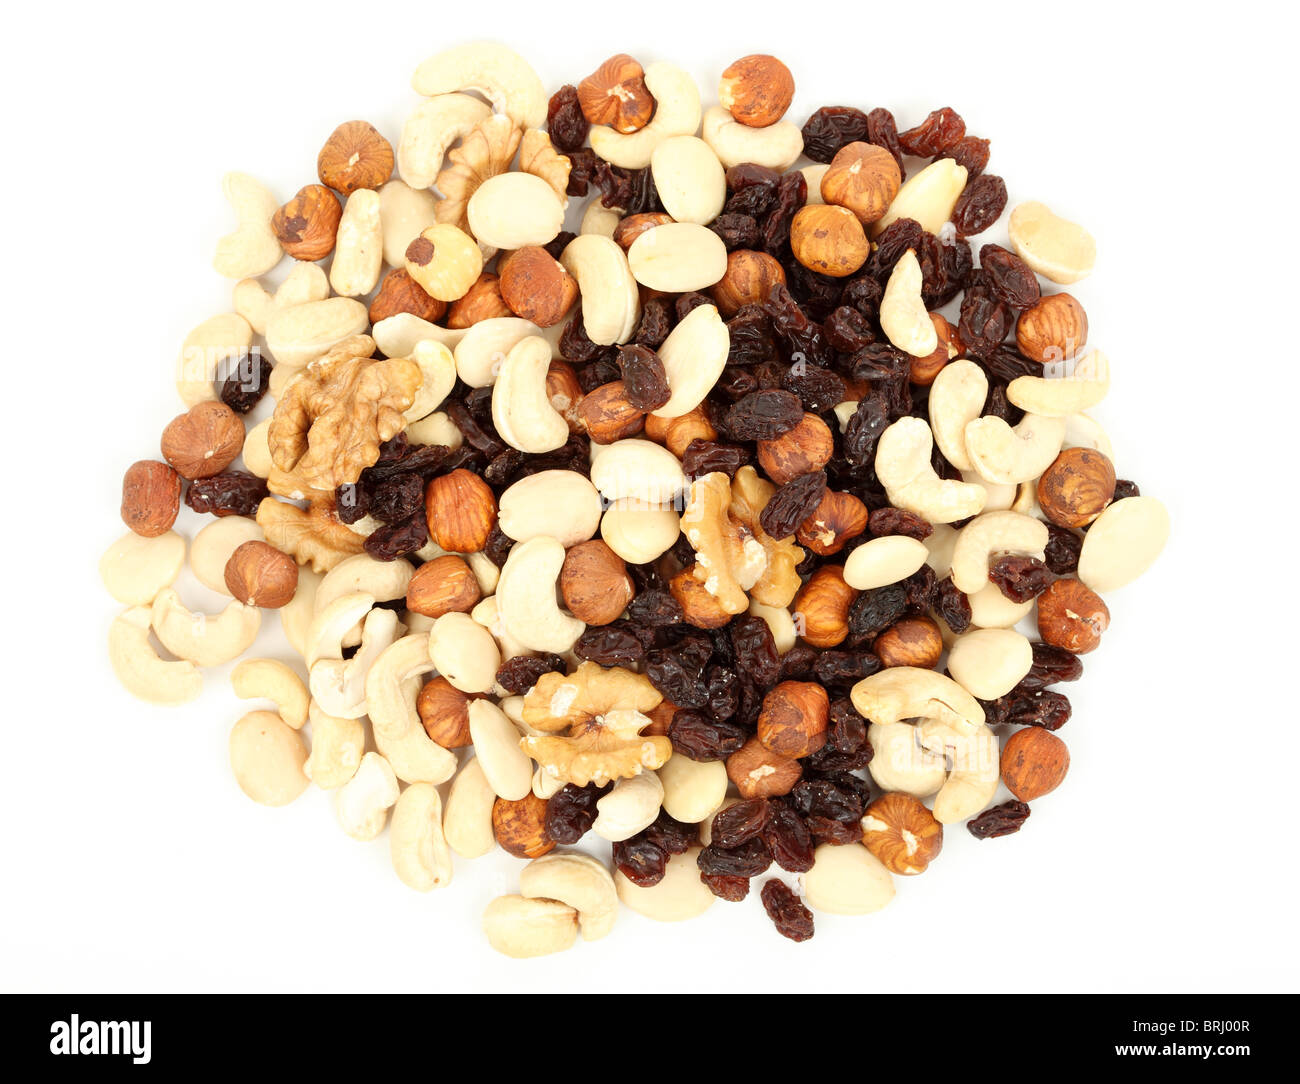 Mixed nuts with walnut, cashew, hazelnut and raisins Stock Photo